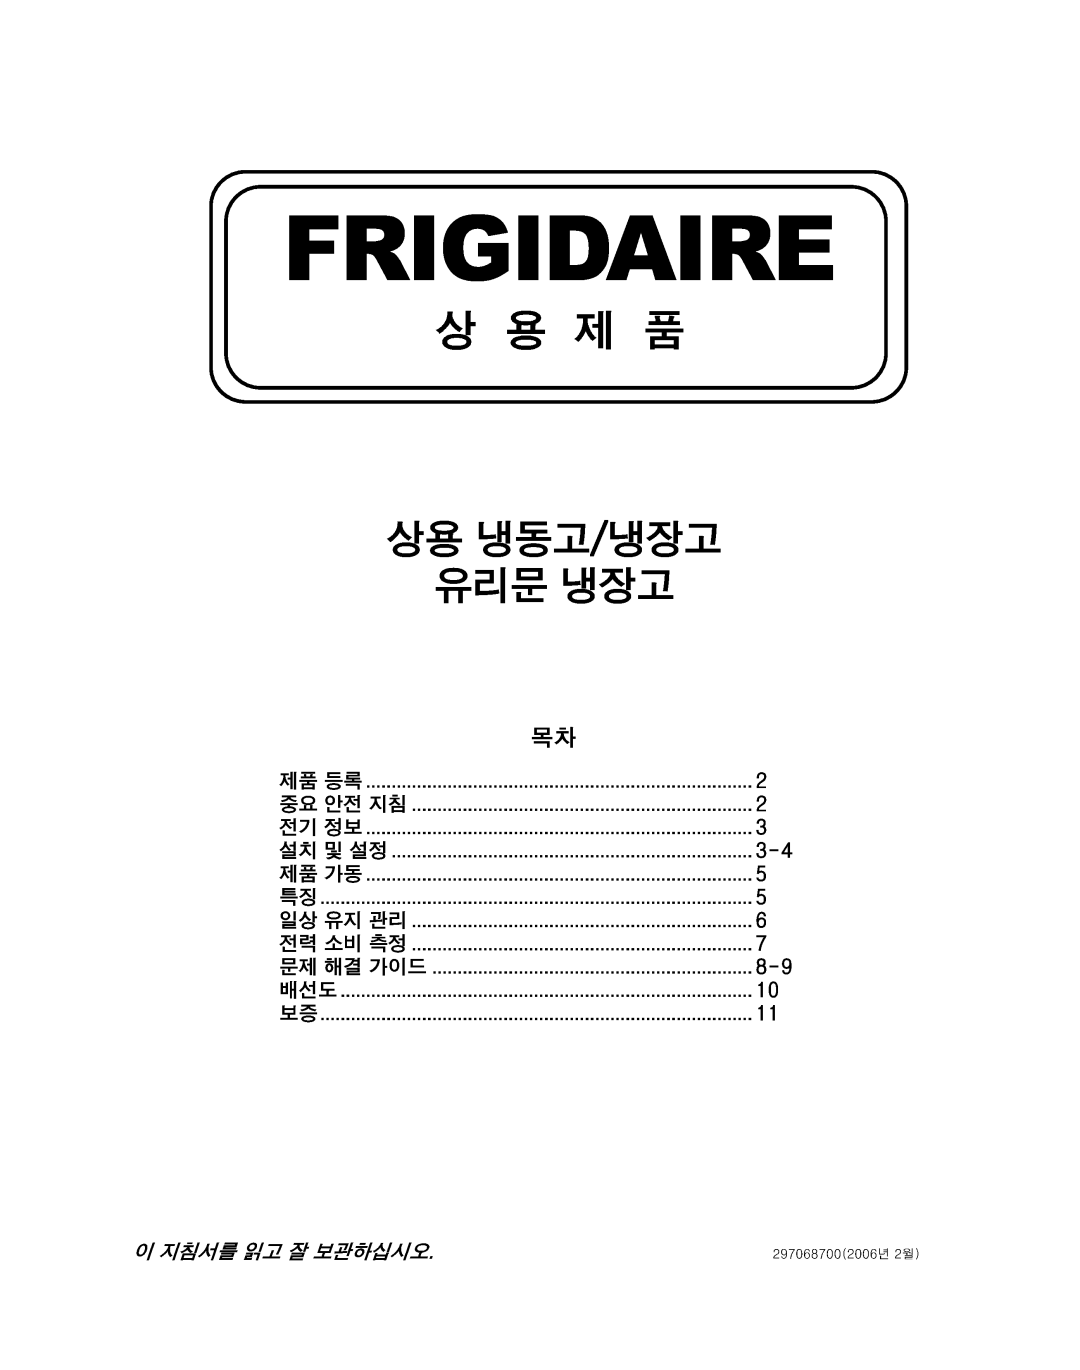 Frigidaire FREEZER/REFRIGERATOR GLASS DOOR REFRIGERATOR important safety instructions Frigidaire 